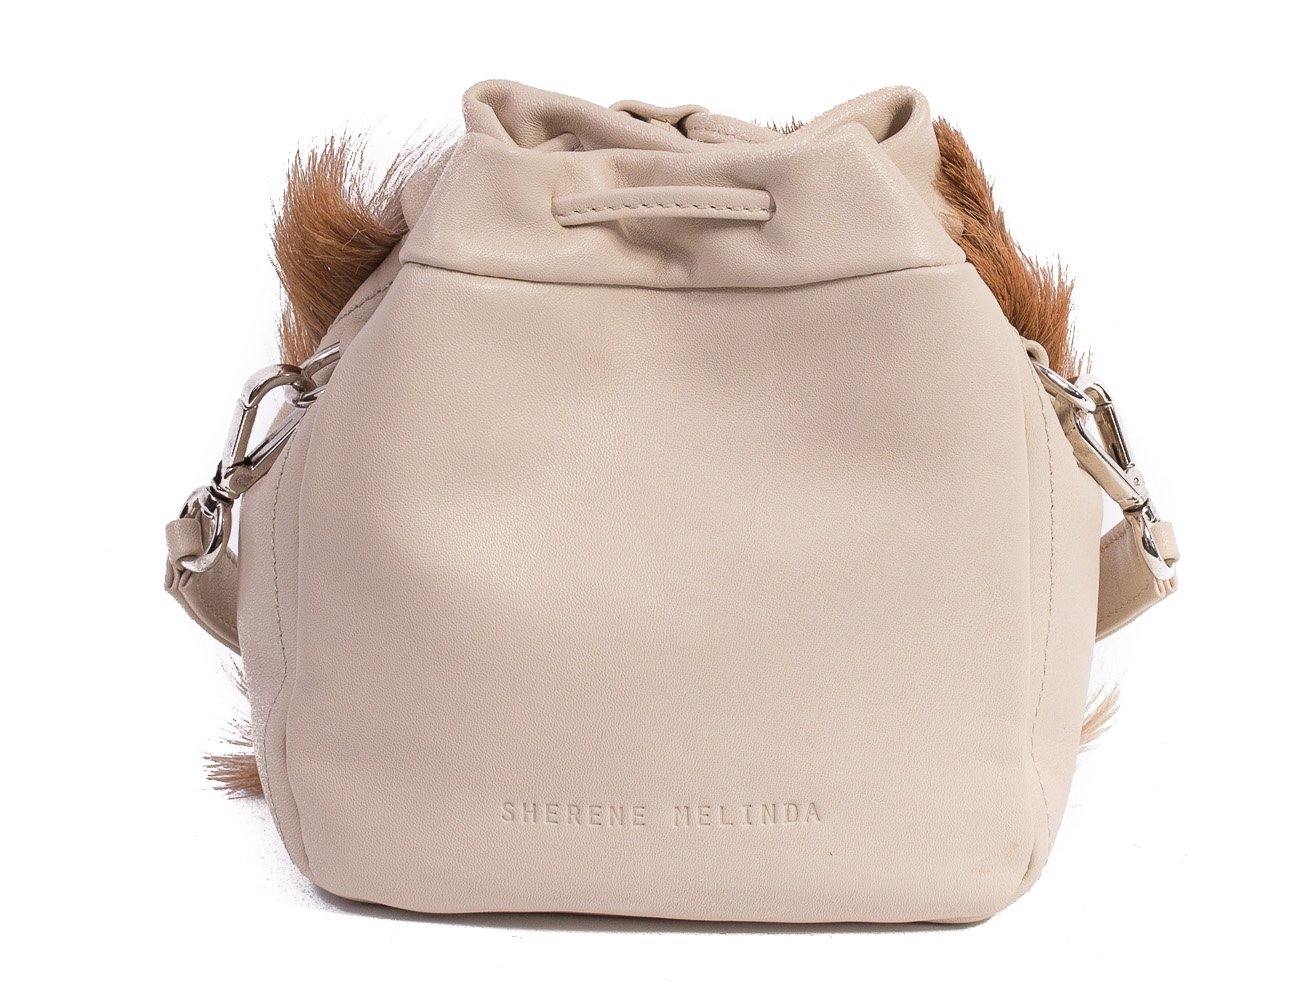 sherene melinda springbok hair-on-hide natural leather pouch bag back